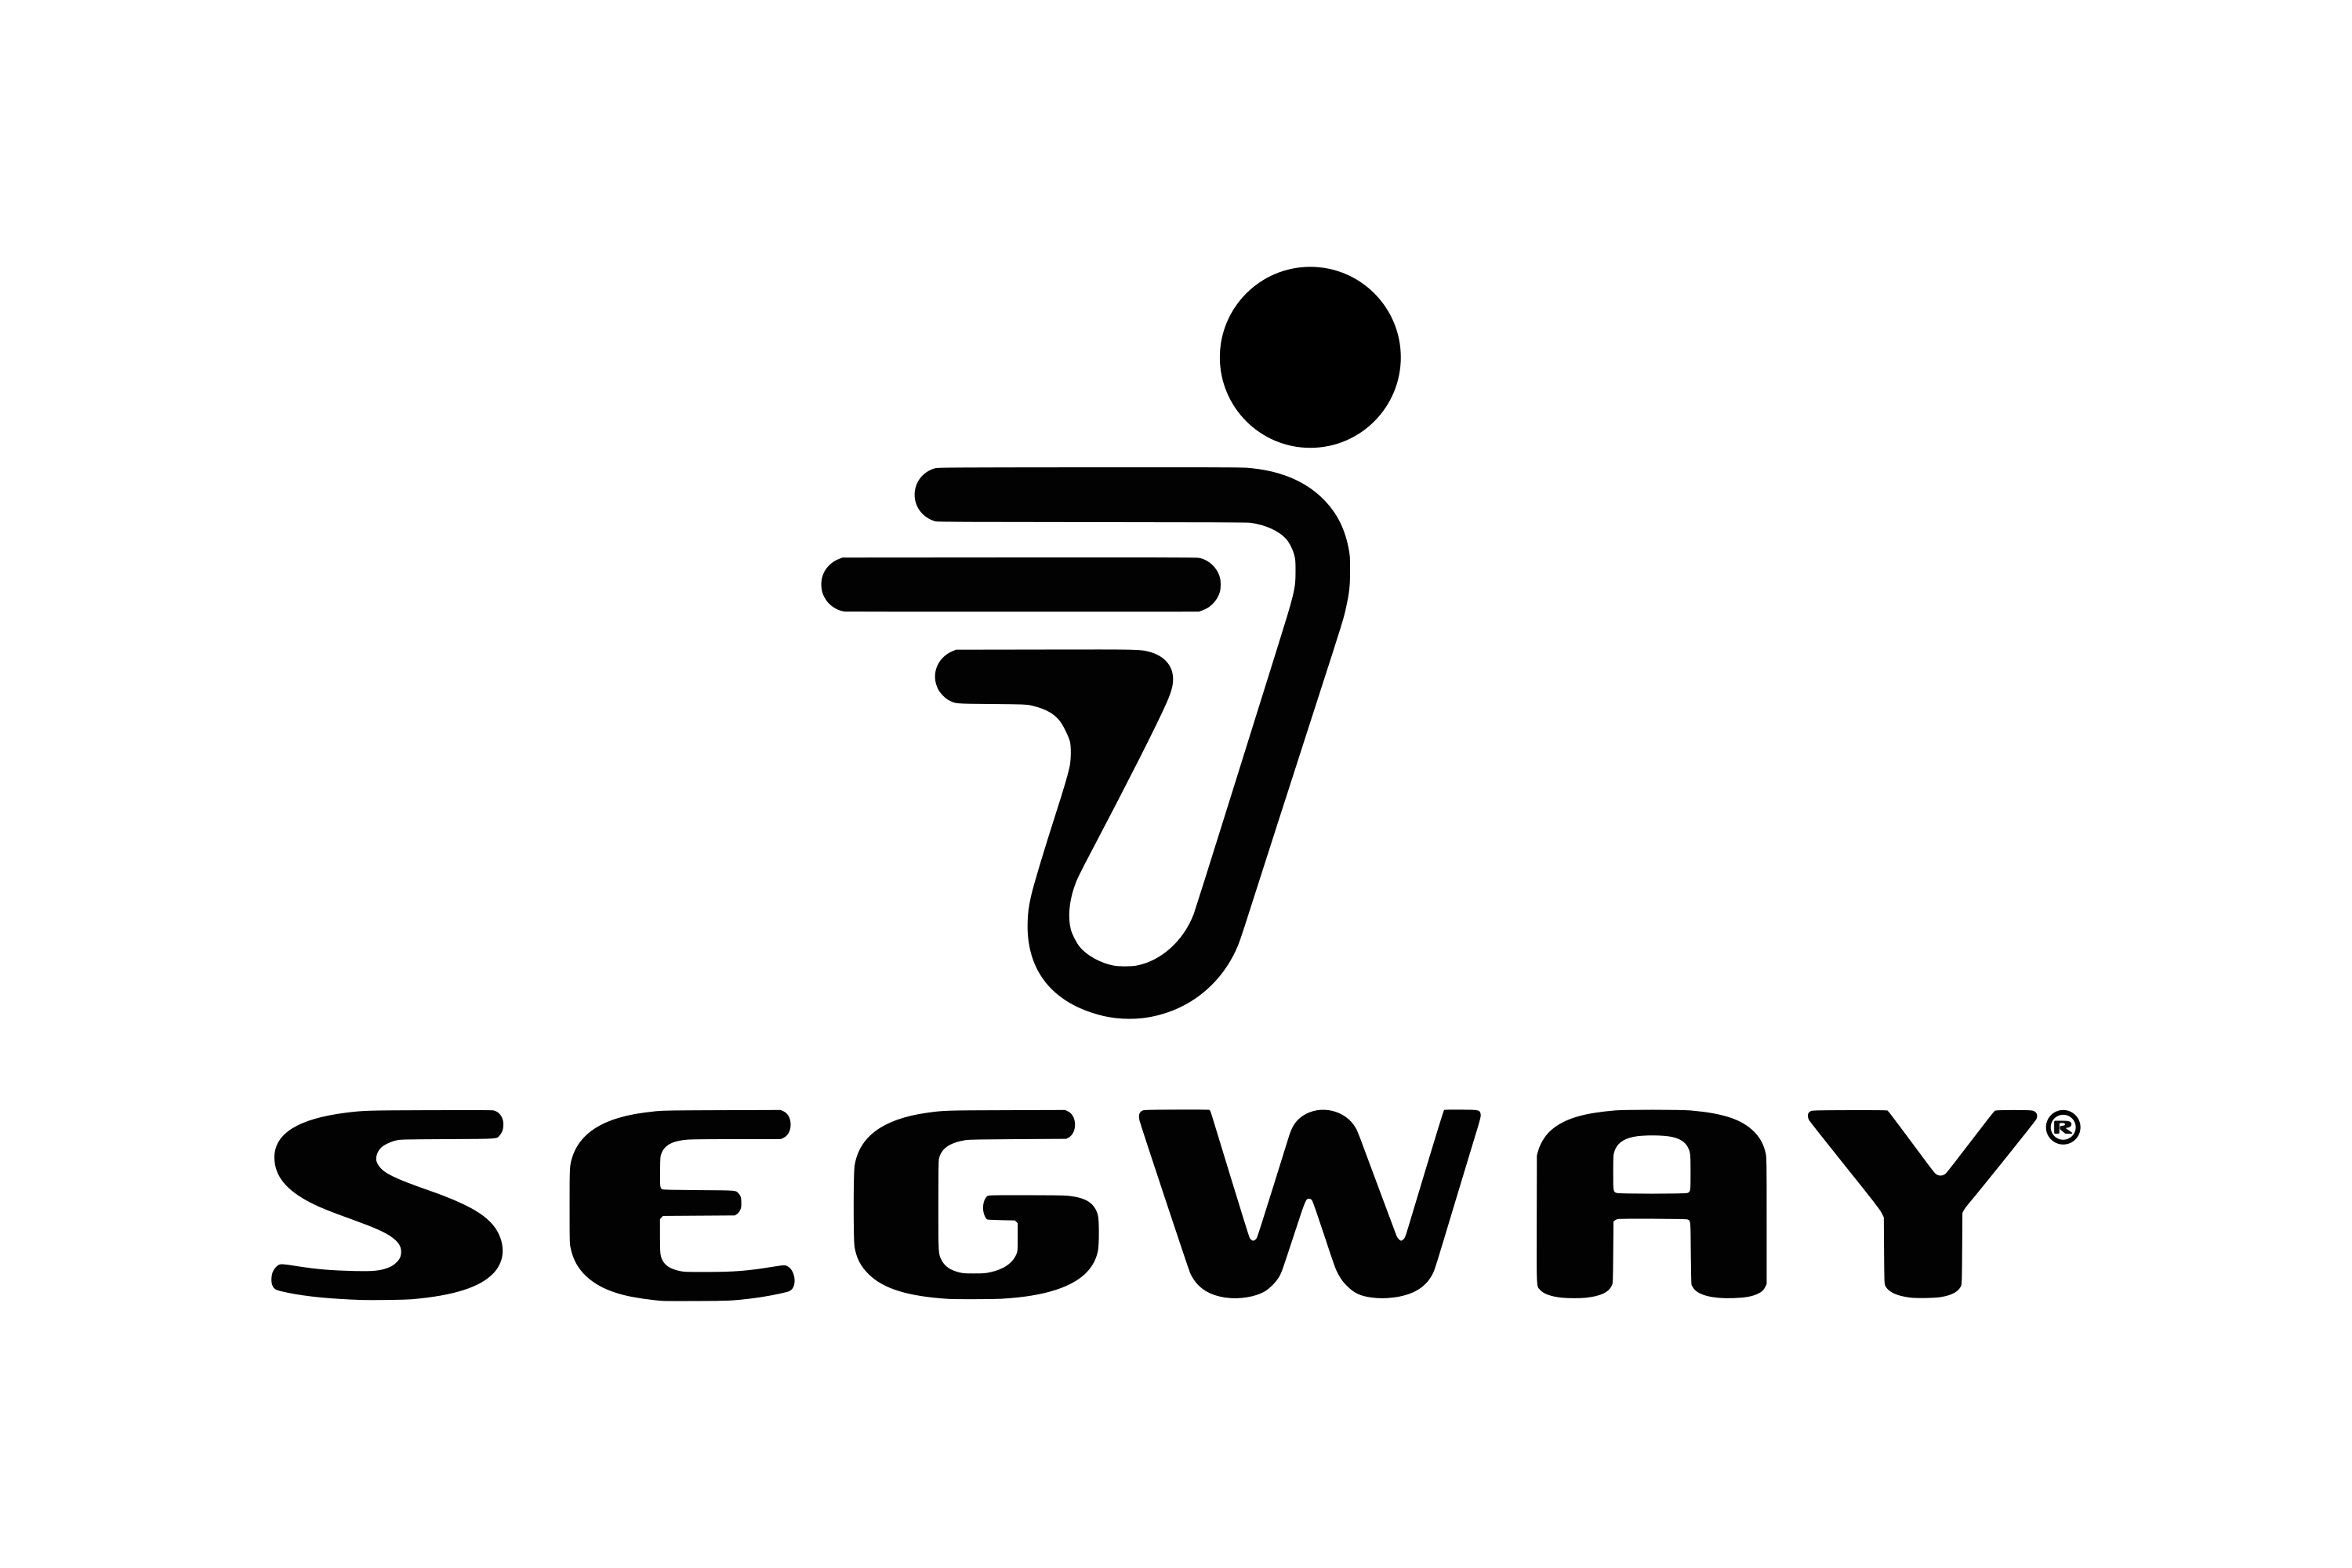 Download Segway Inc. Logo in SVG Vector or PNG File Format - Logo.wine